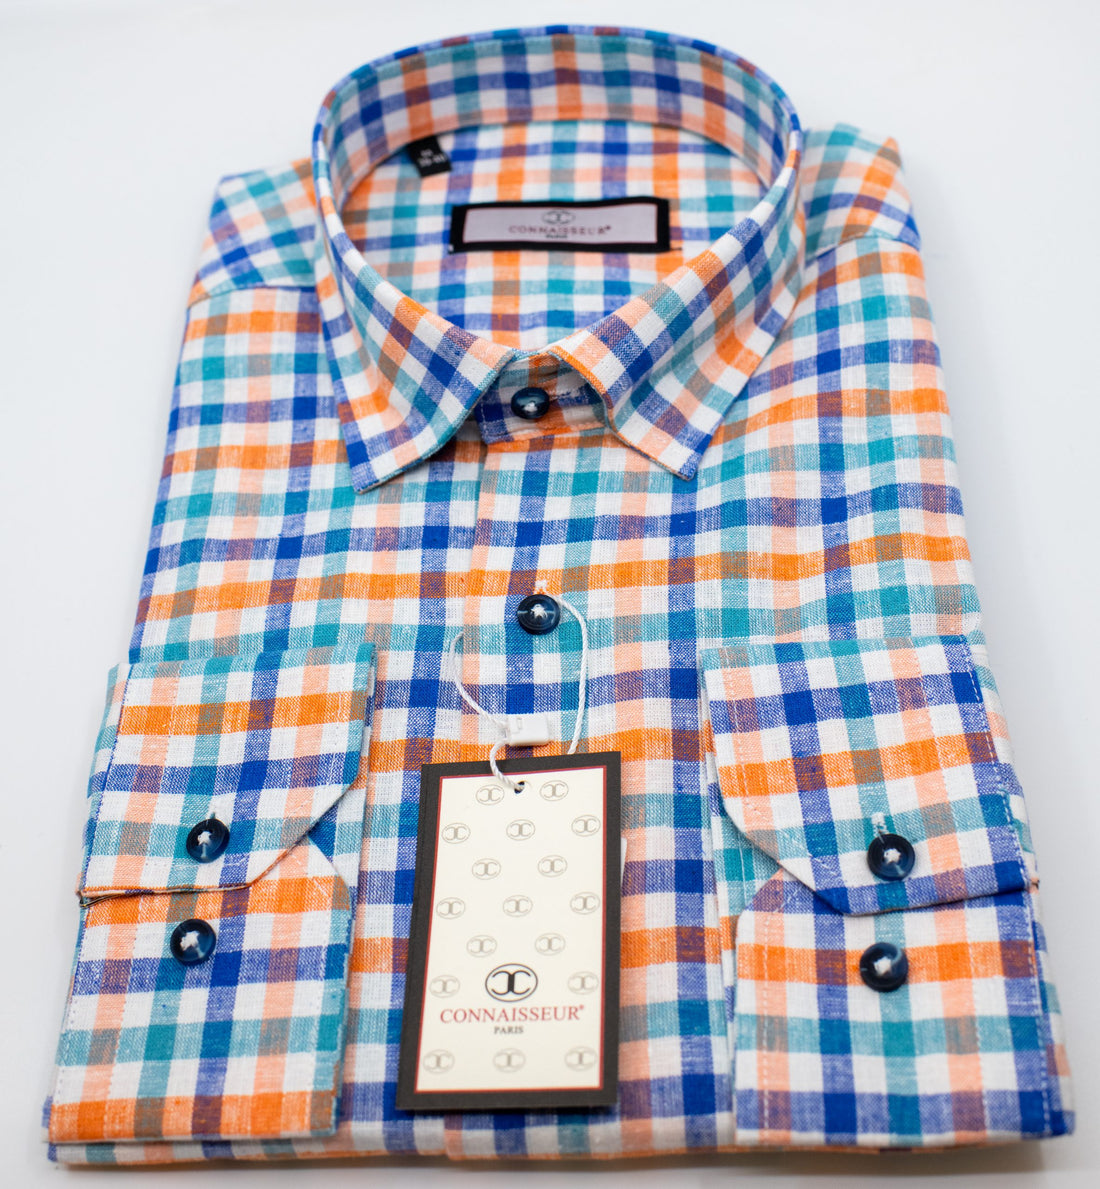 Connaisseur - Blue slim fit dress shirt with double button Italian collar